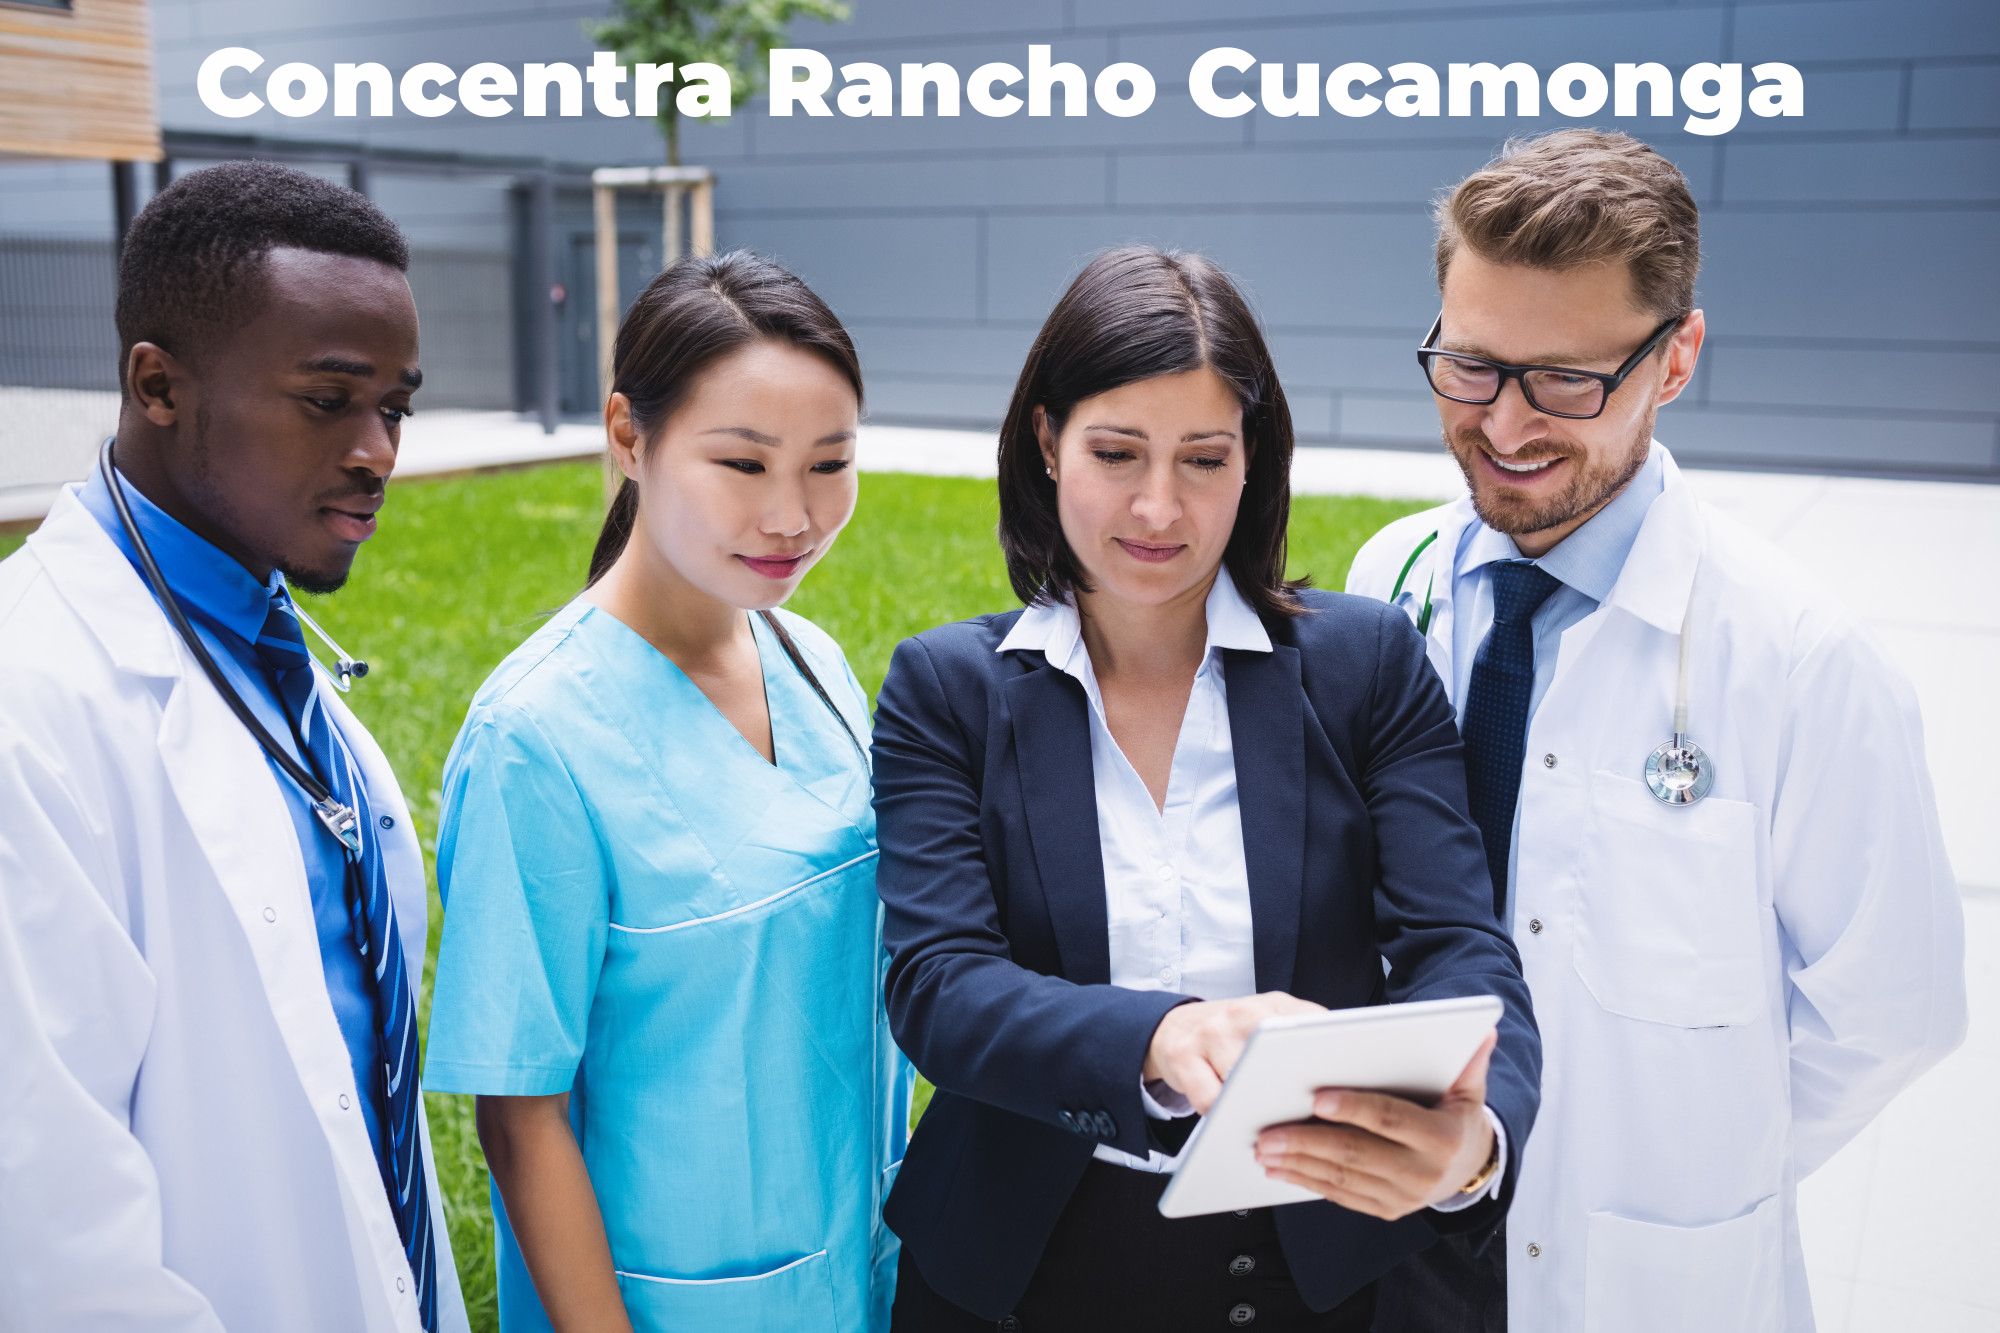 Concentra Rancho Cucamonga